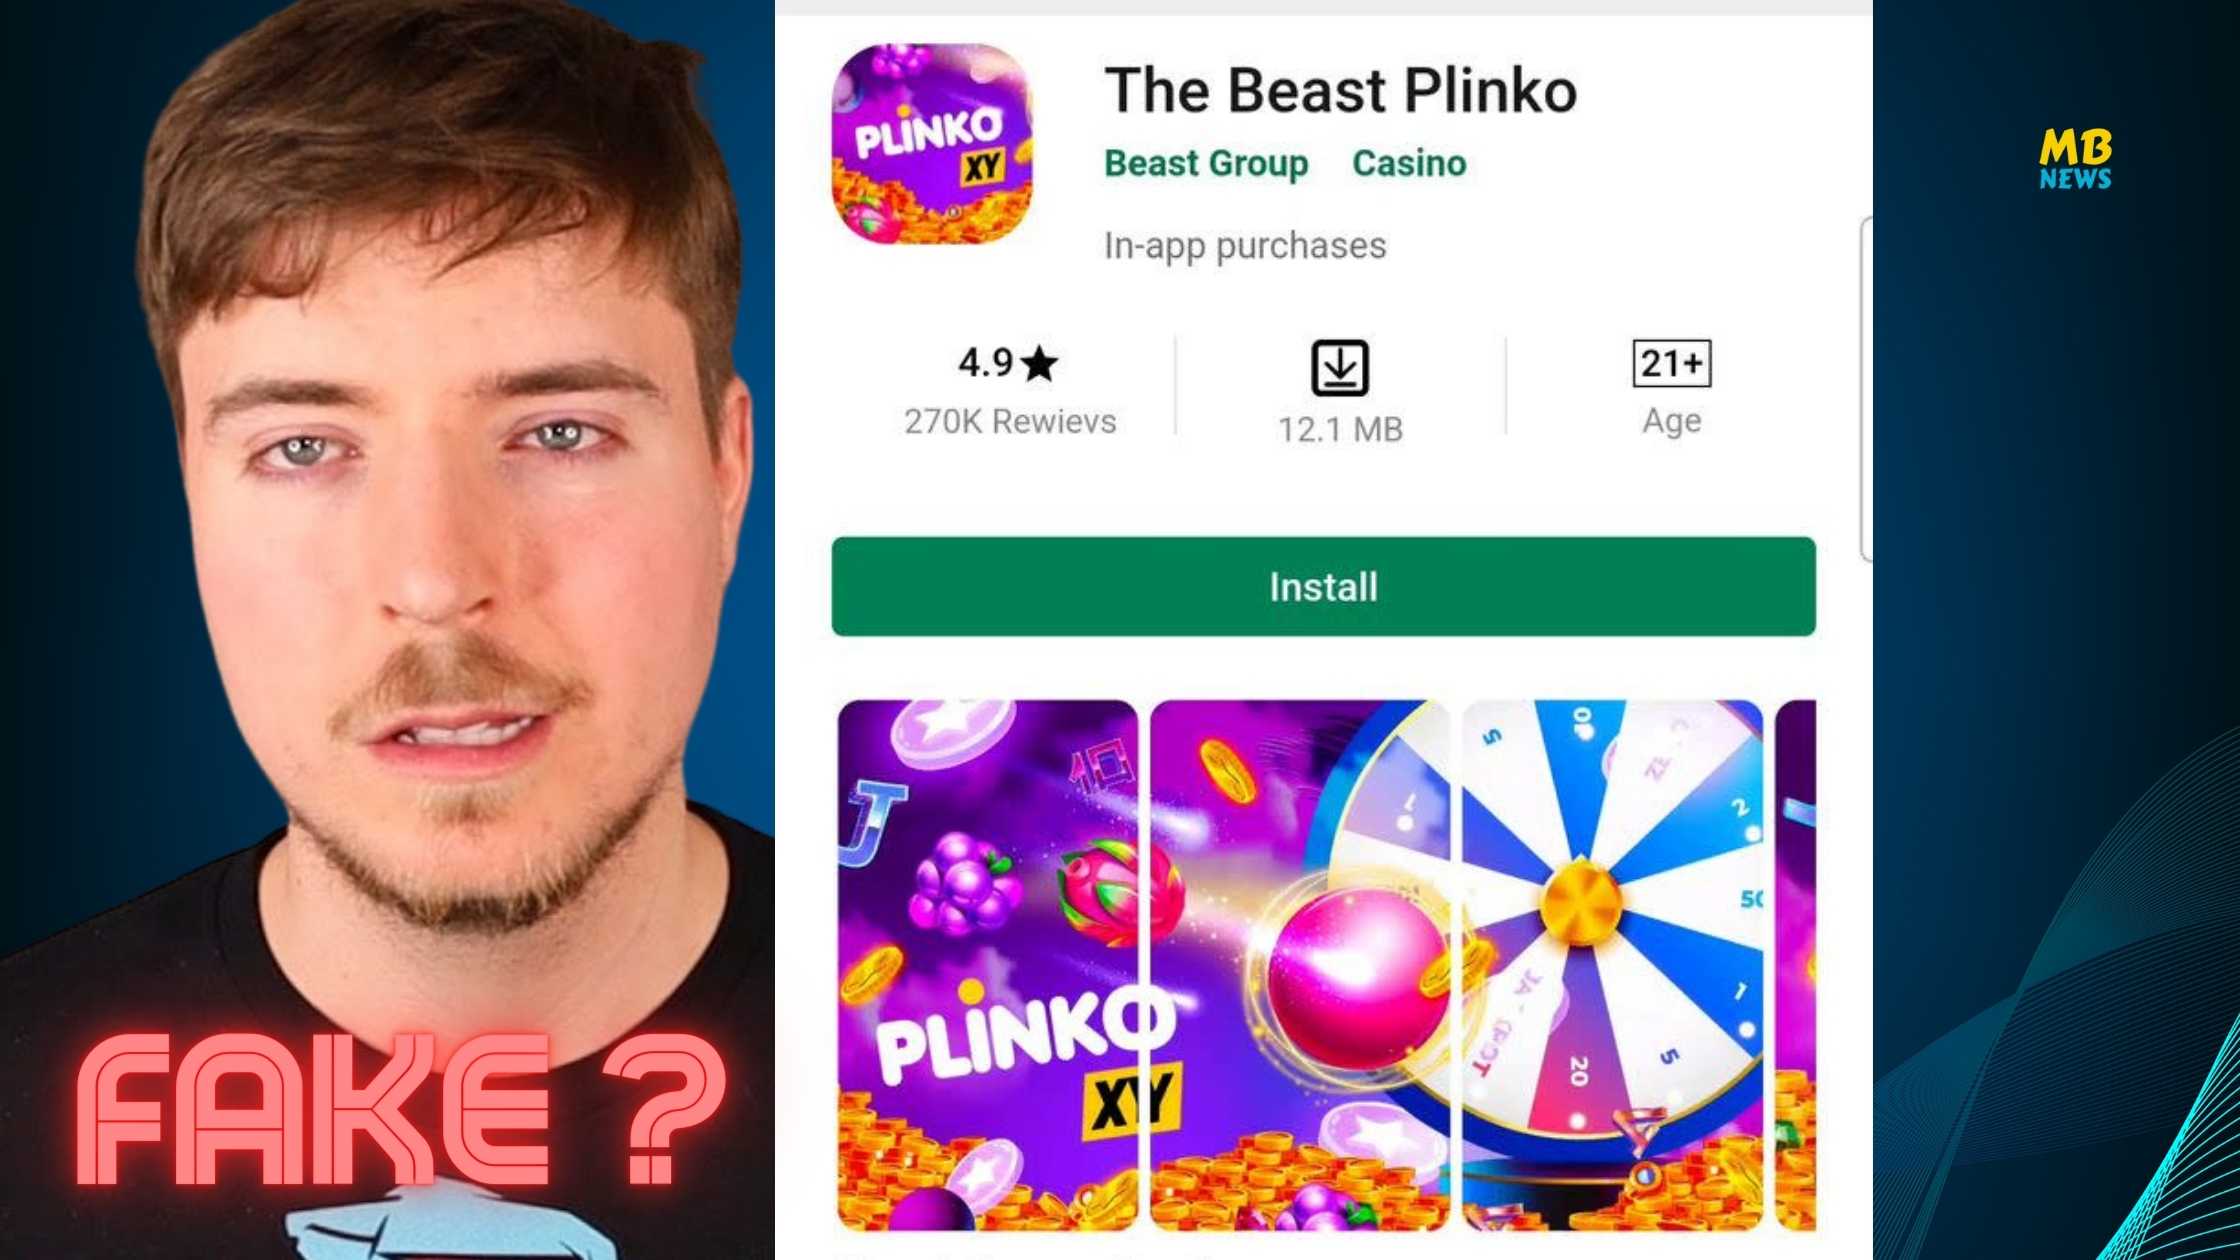 MrBeast Launched Casino App 'The Beast Plinko' Legit or Scam?